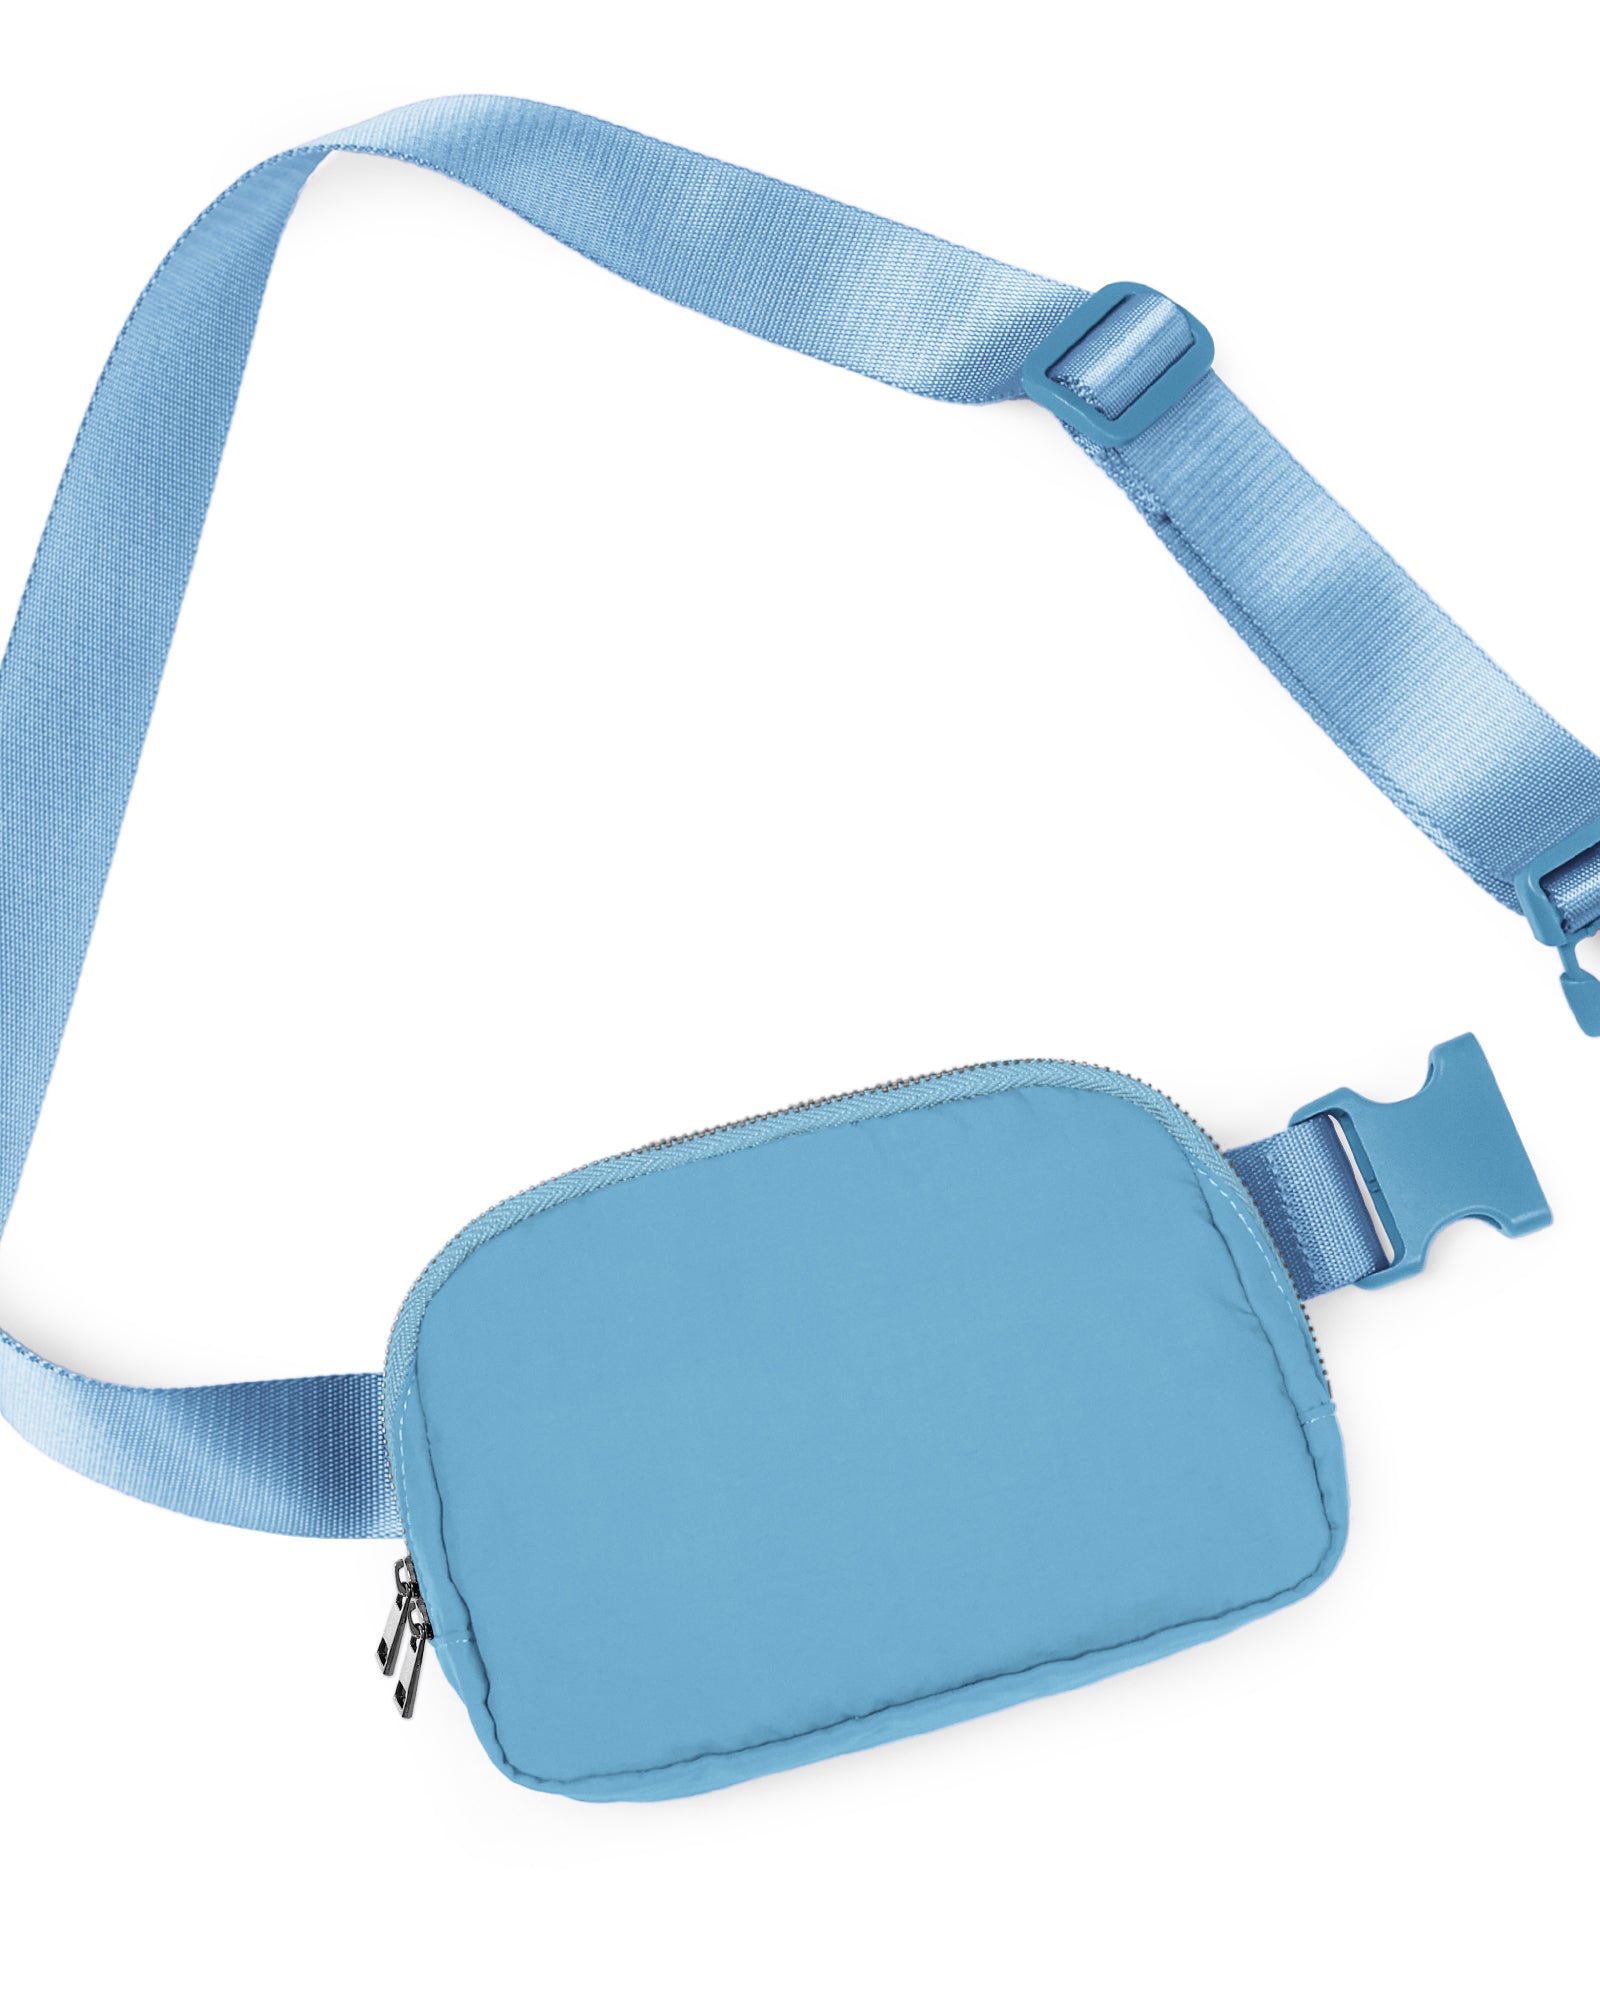 Unisex Two-Way Zip Mini Belt Bag Steel Blue 8" x 2" x 5.5" - ododos